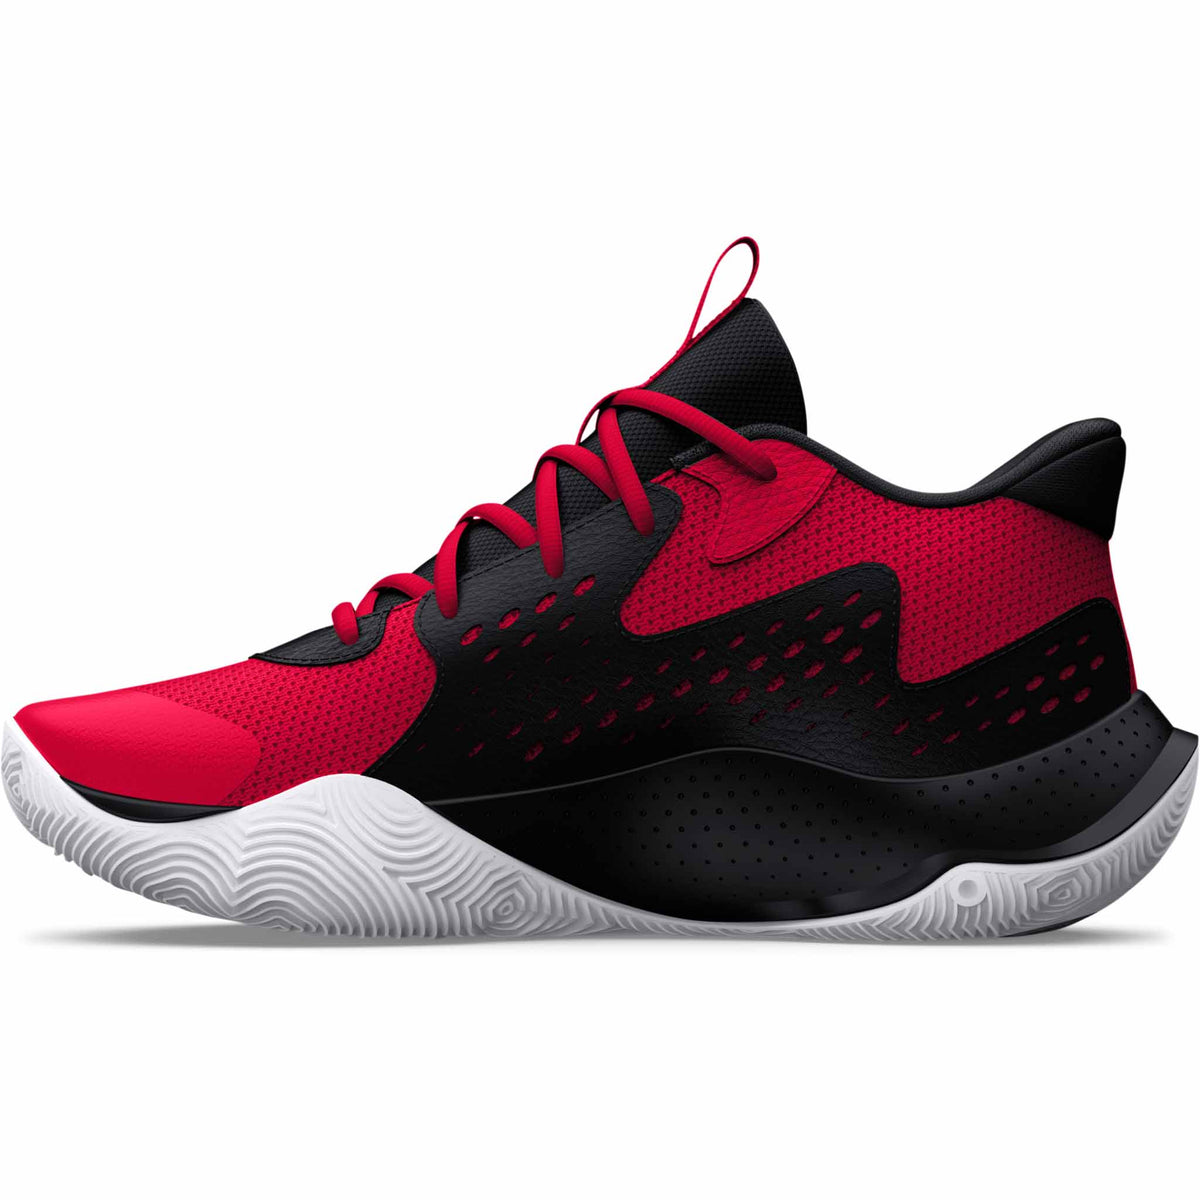 Under Armour Jet 23 chaussures de basketball pour adulte - Red / Black